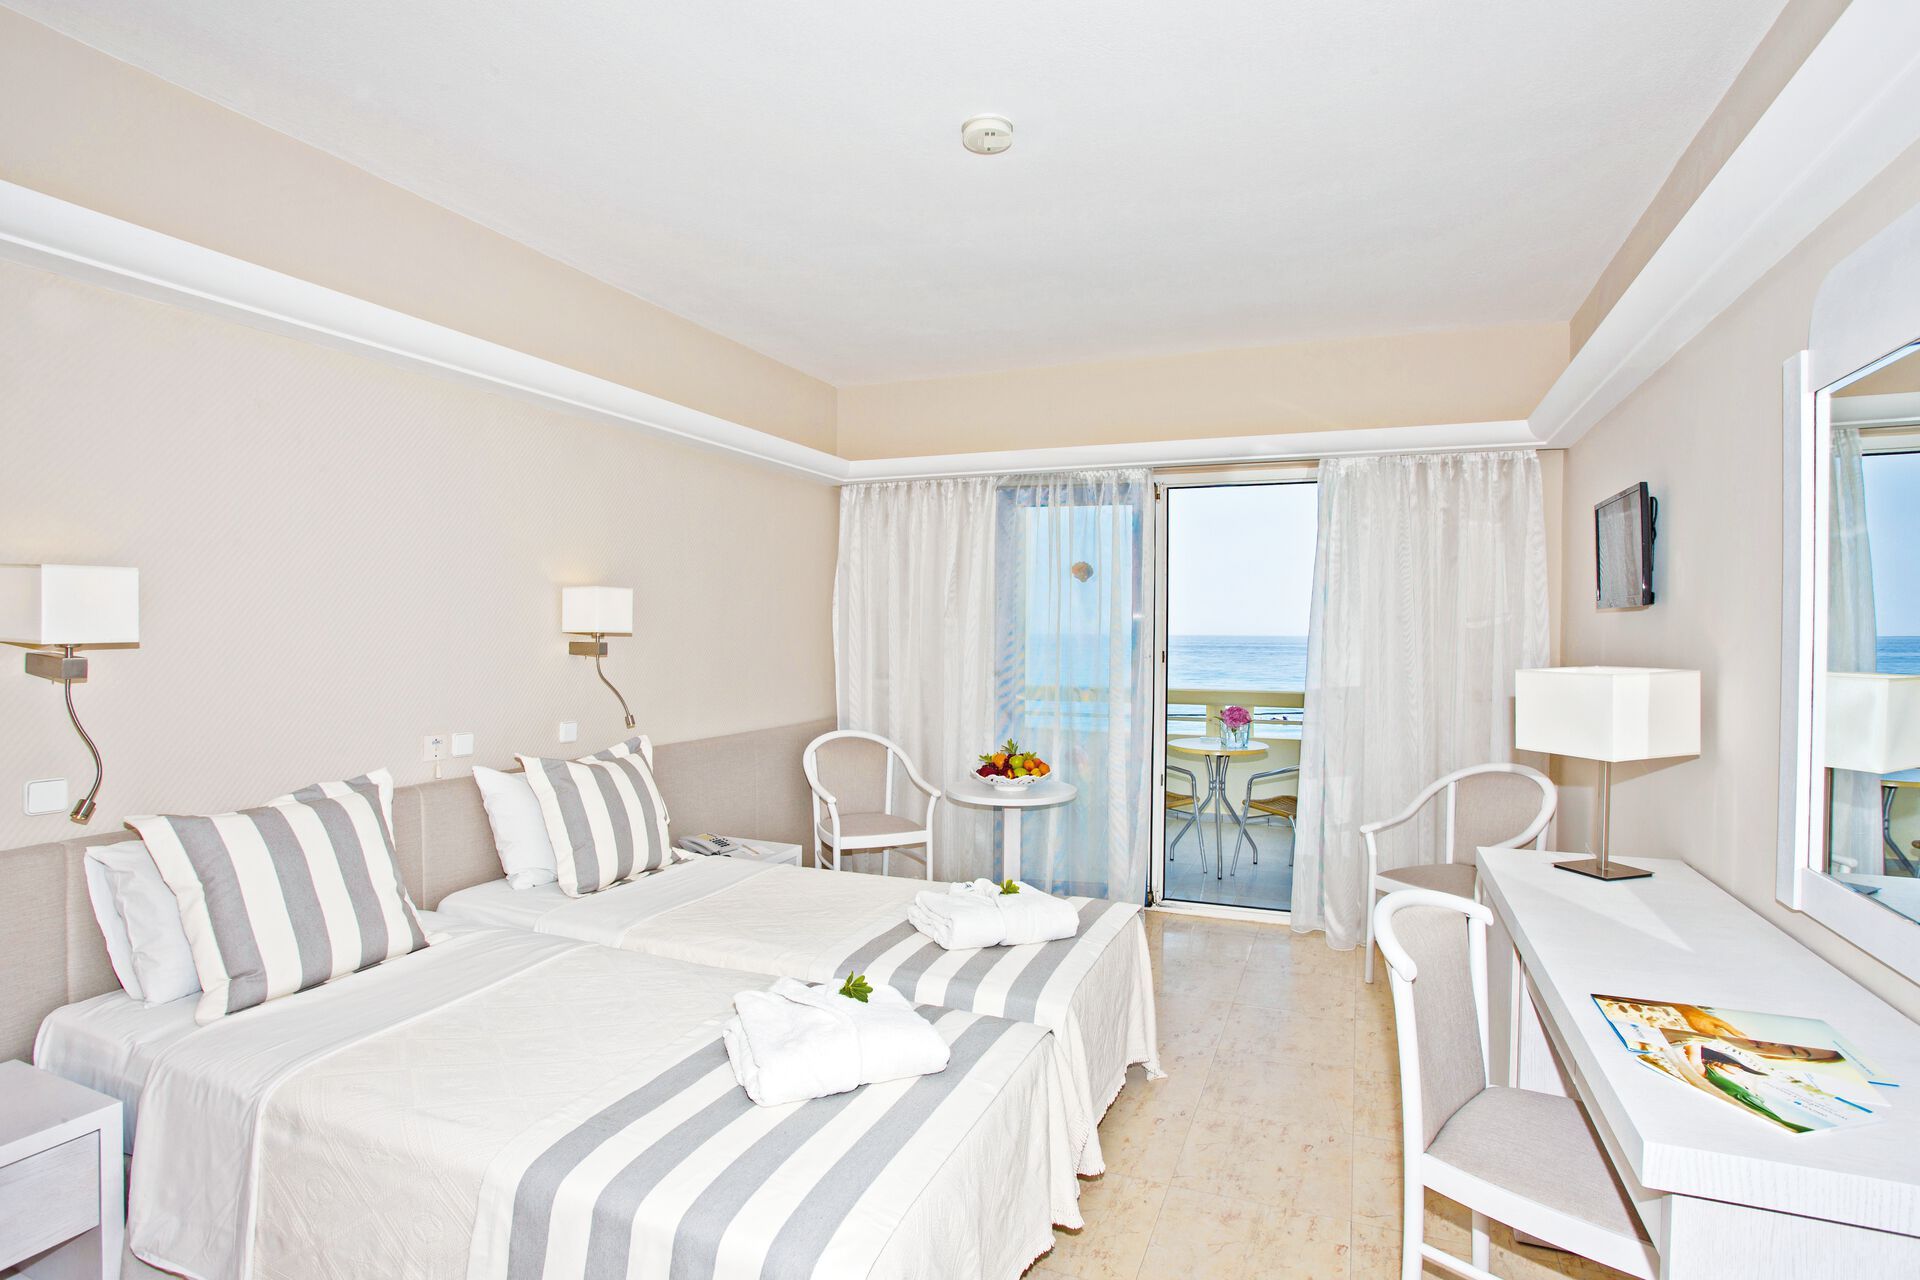 Crète - Rethymnon - Grèce - Iles grecques - Hotel Pearl Beach 4*